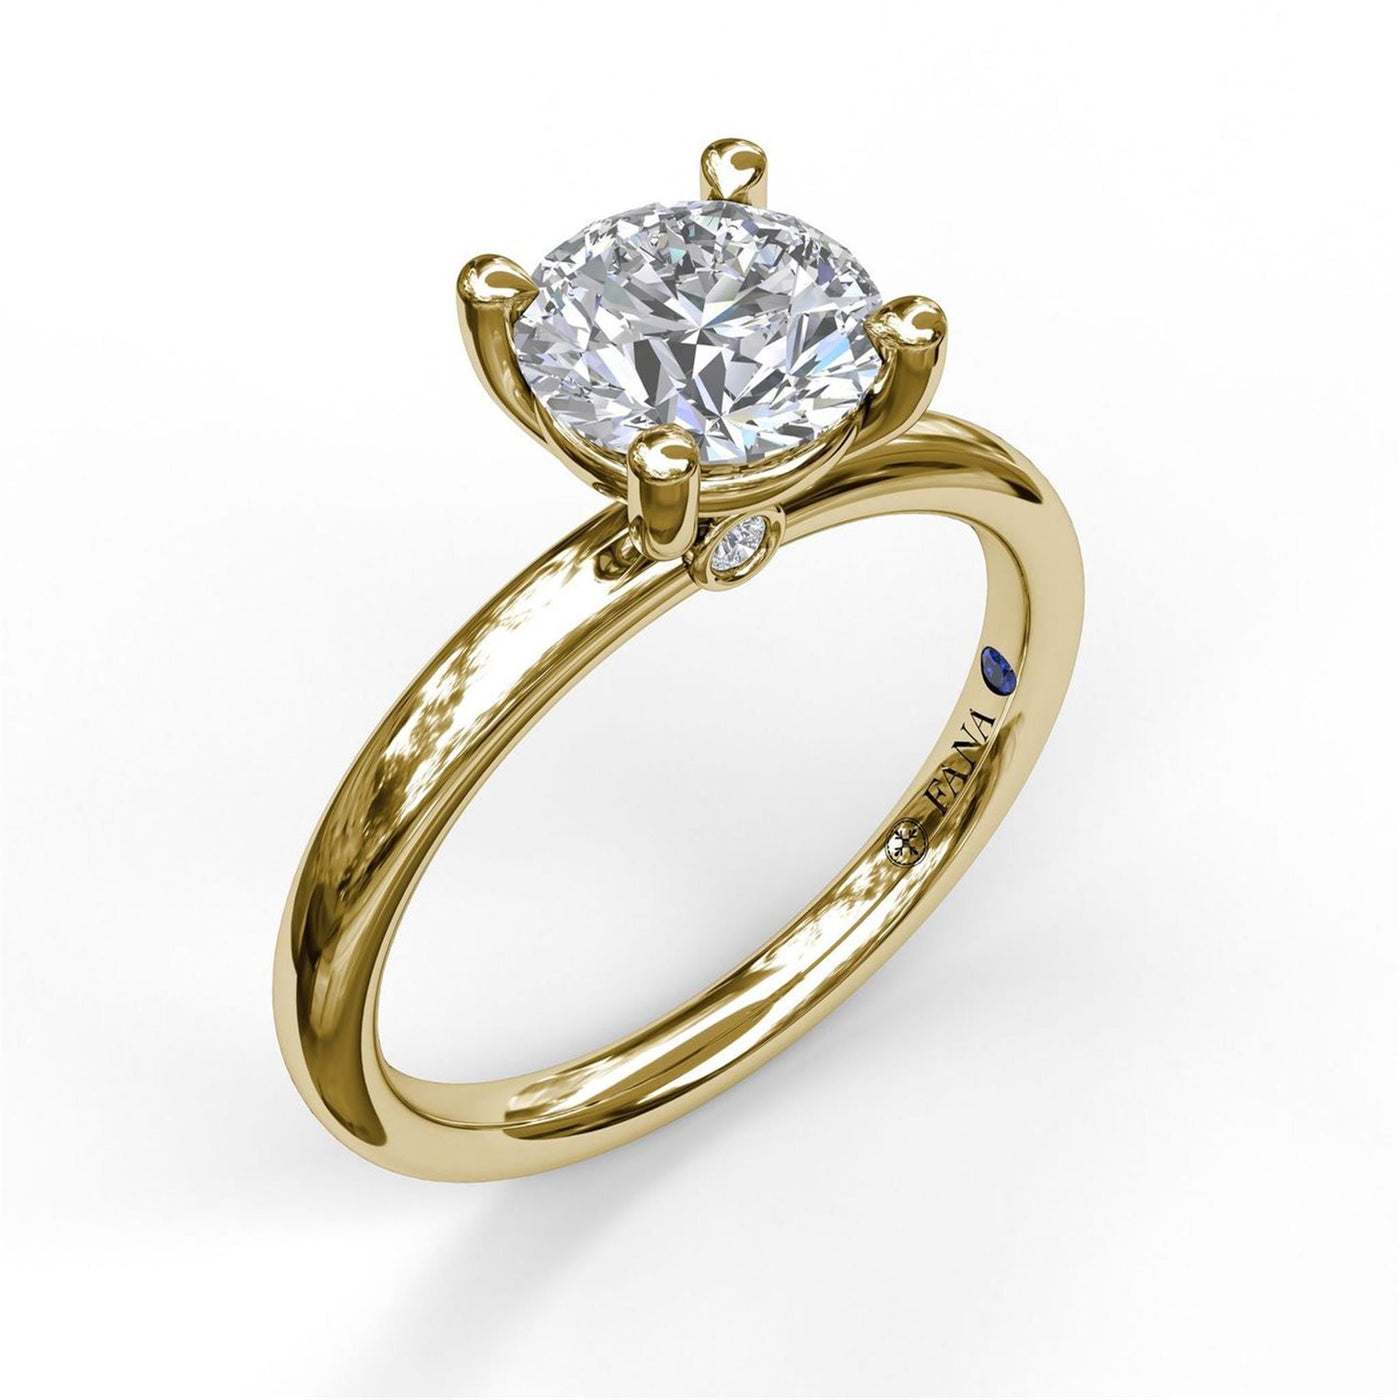 Fana 14K Yellow Gold .03ctw 4 Prong Style Diamond Semi-Mount Engagement Ring